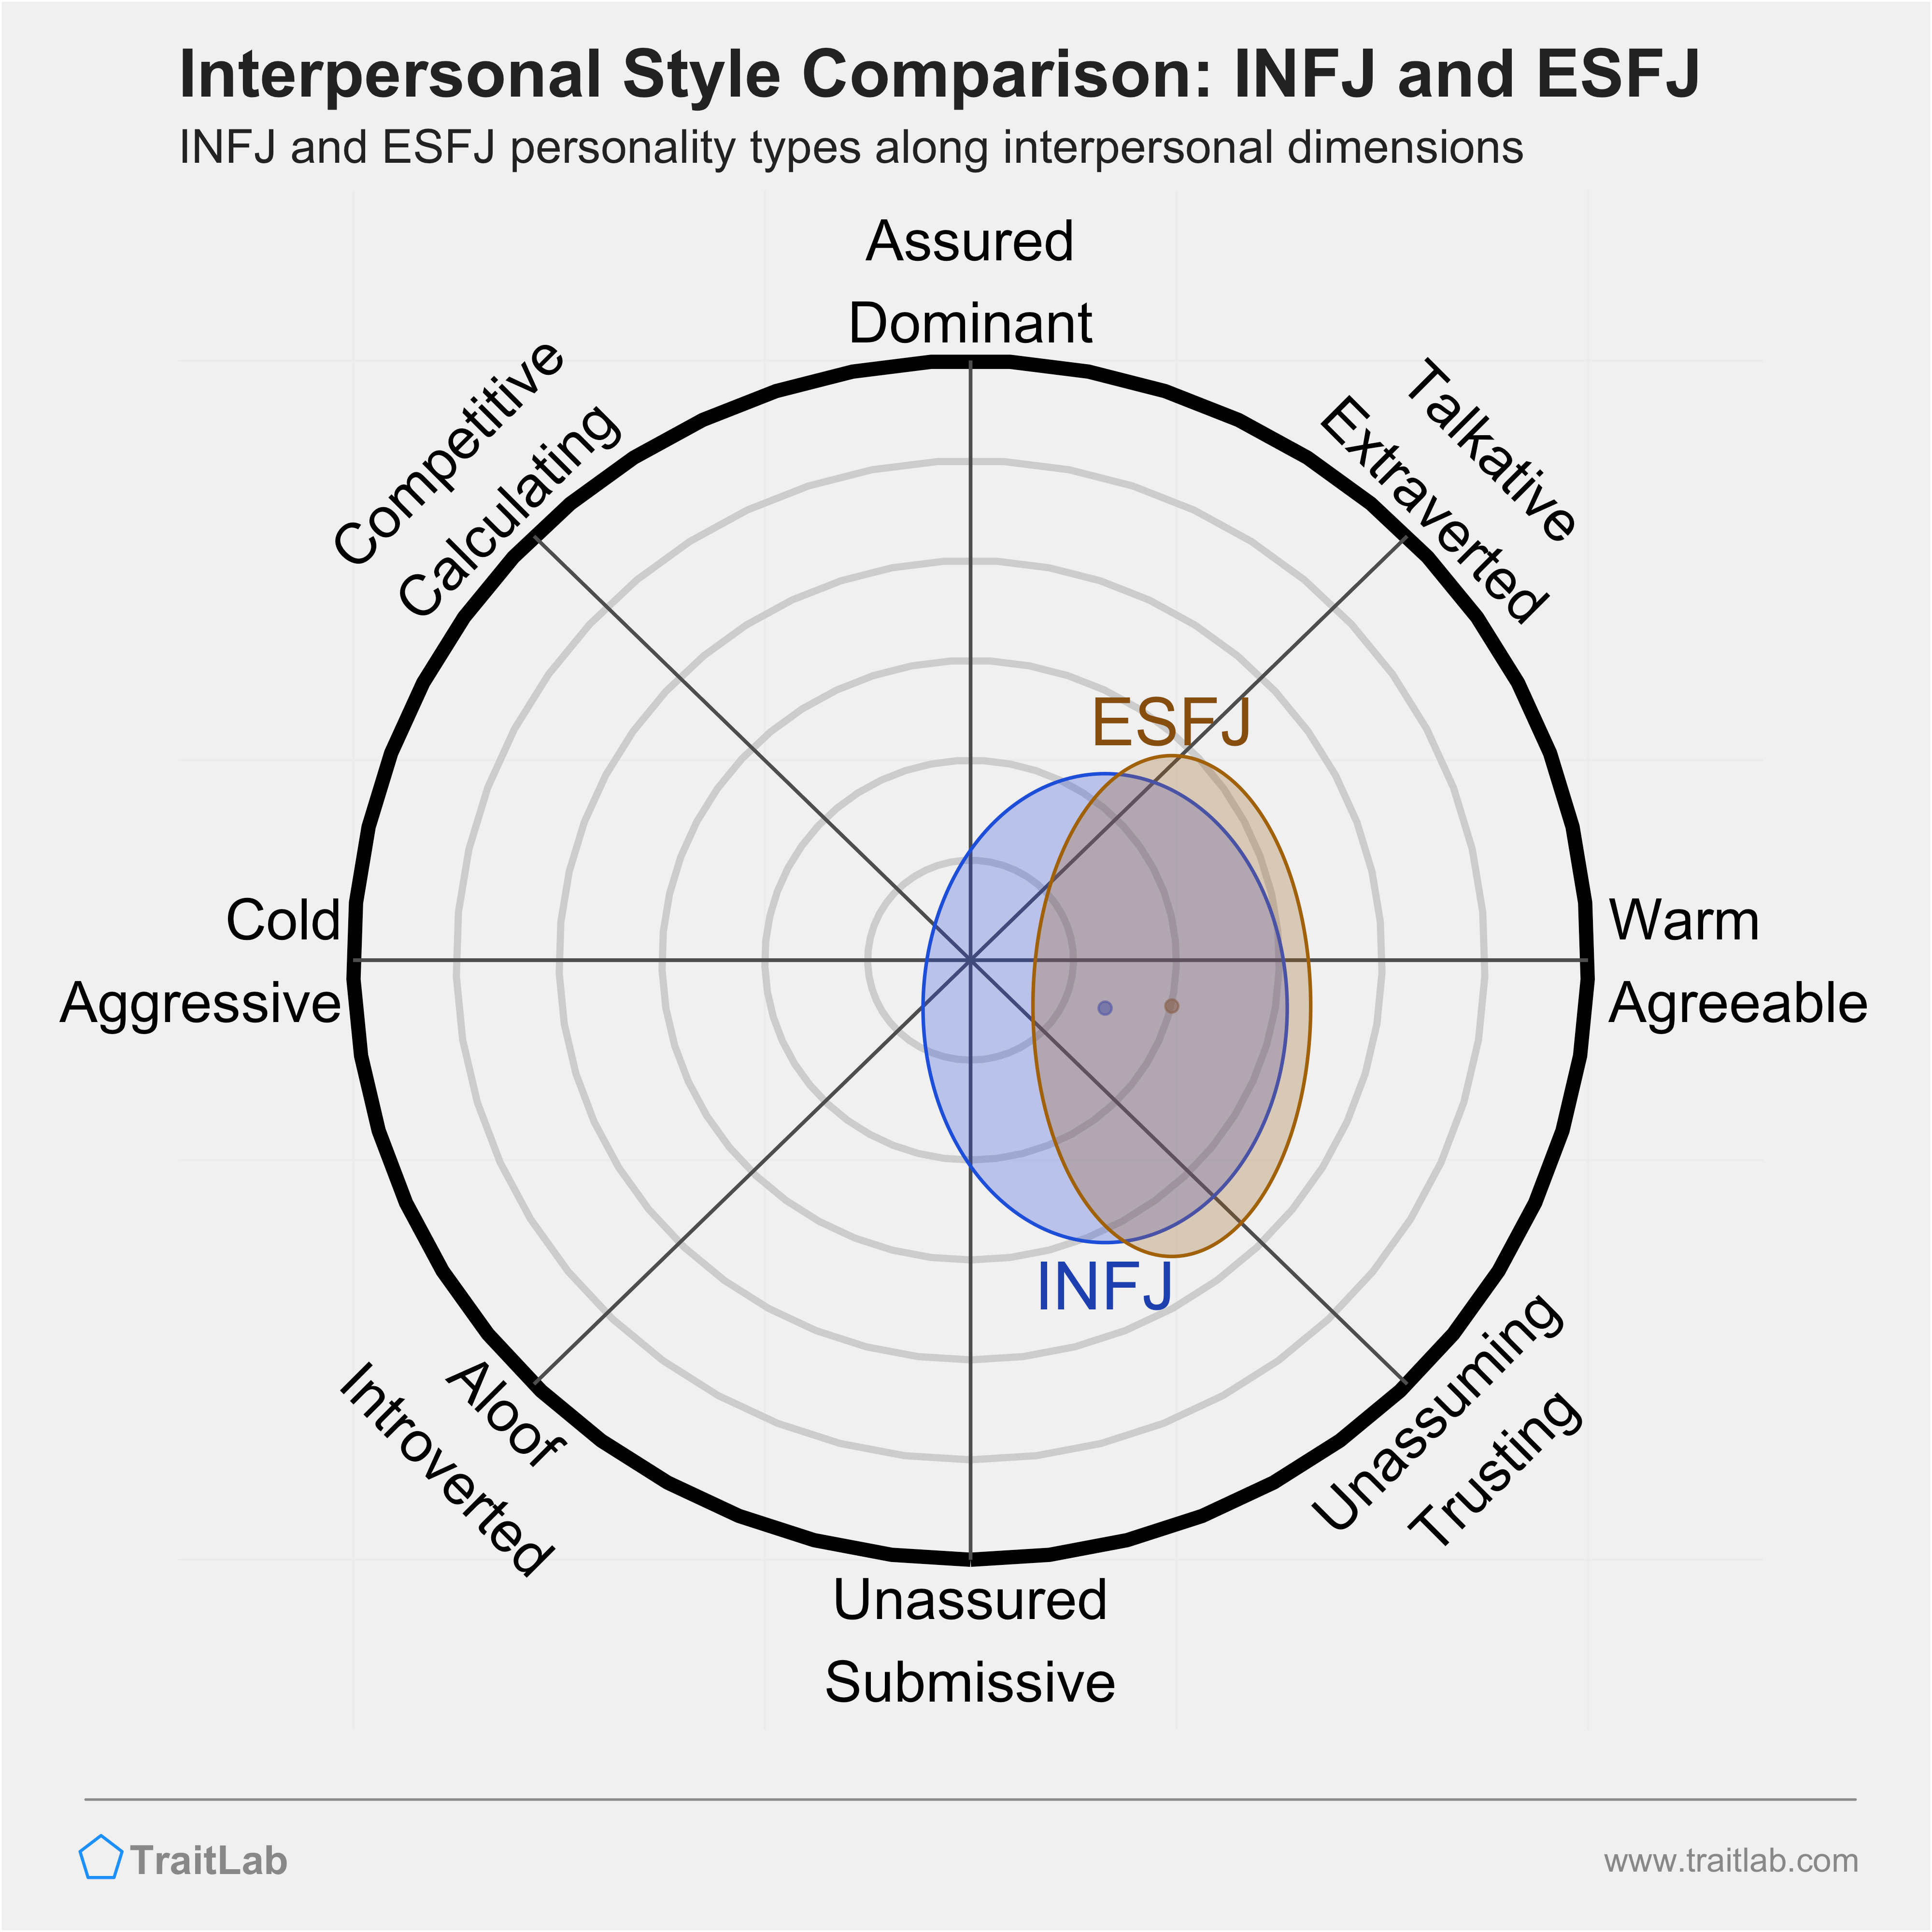 INFJ and ESFJ comparison across interpersonal dimensions